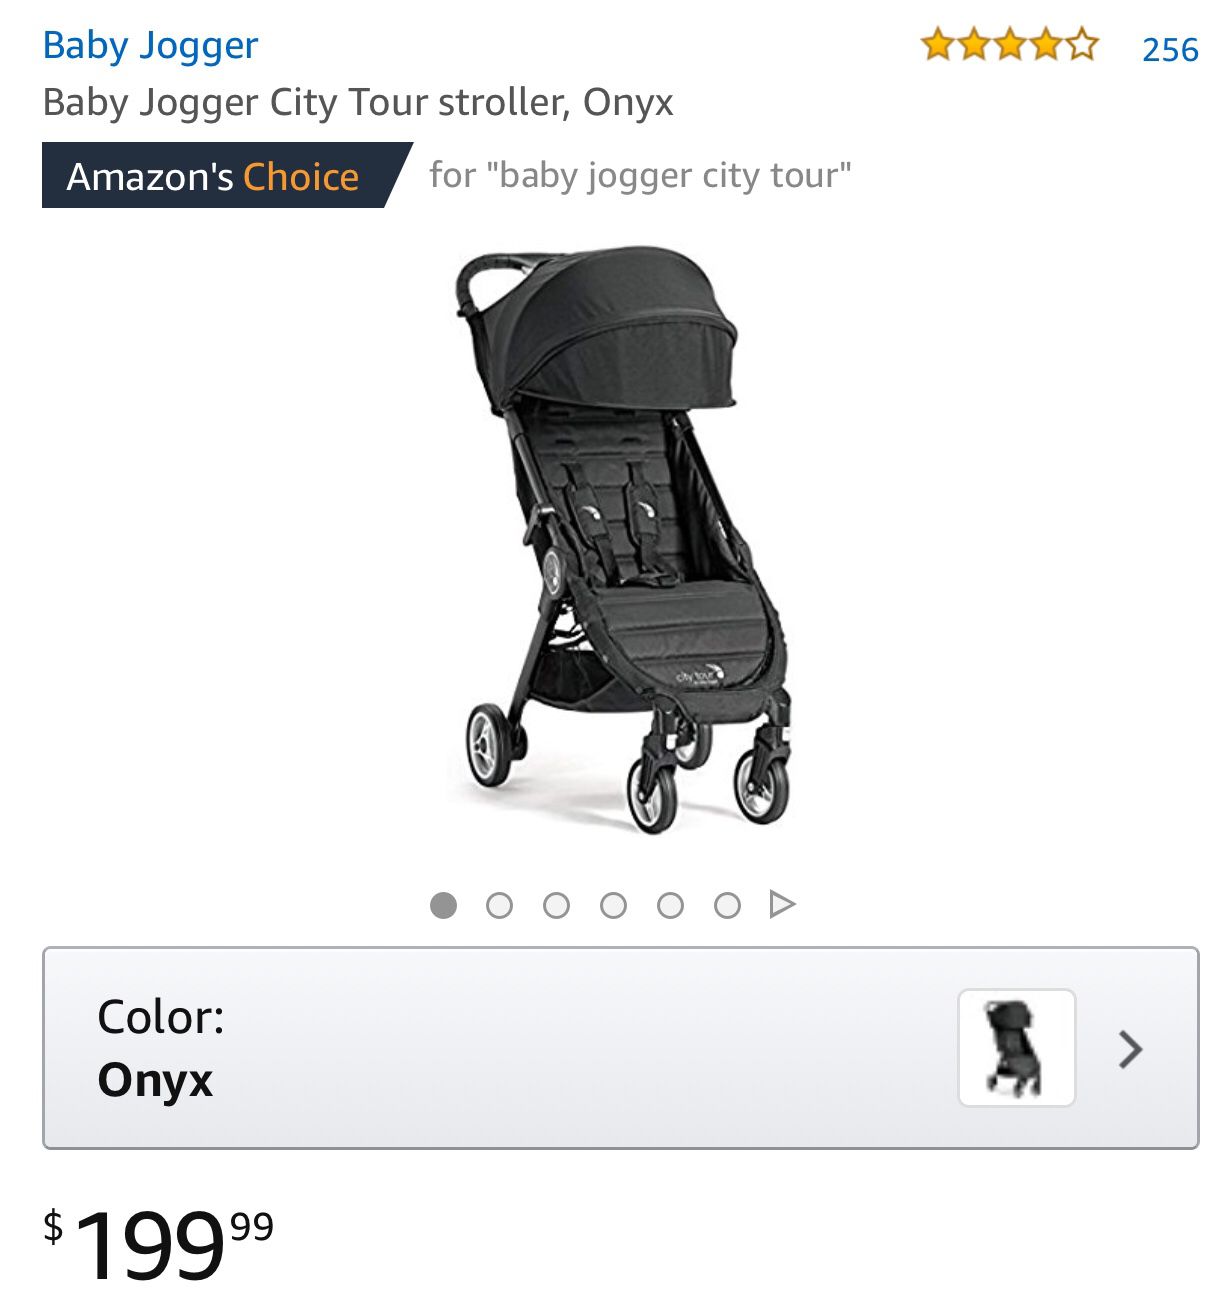 Baby Jogger City Tour stroller, Onyx